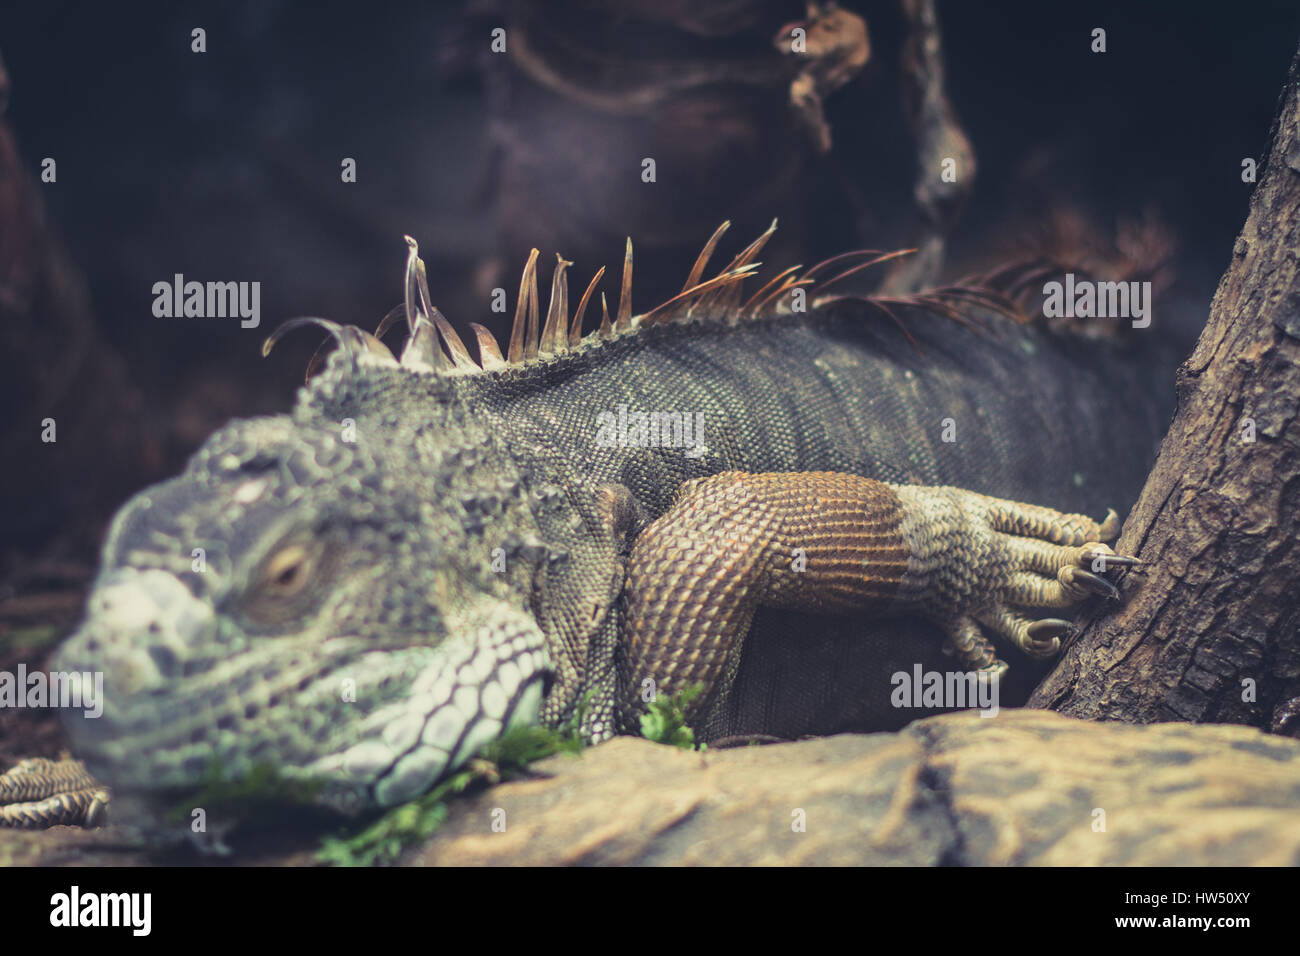 closeup of reptile / lizard  in nature Stock Photo